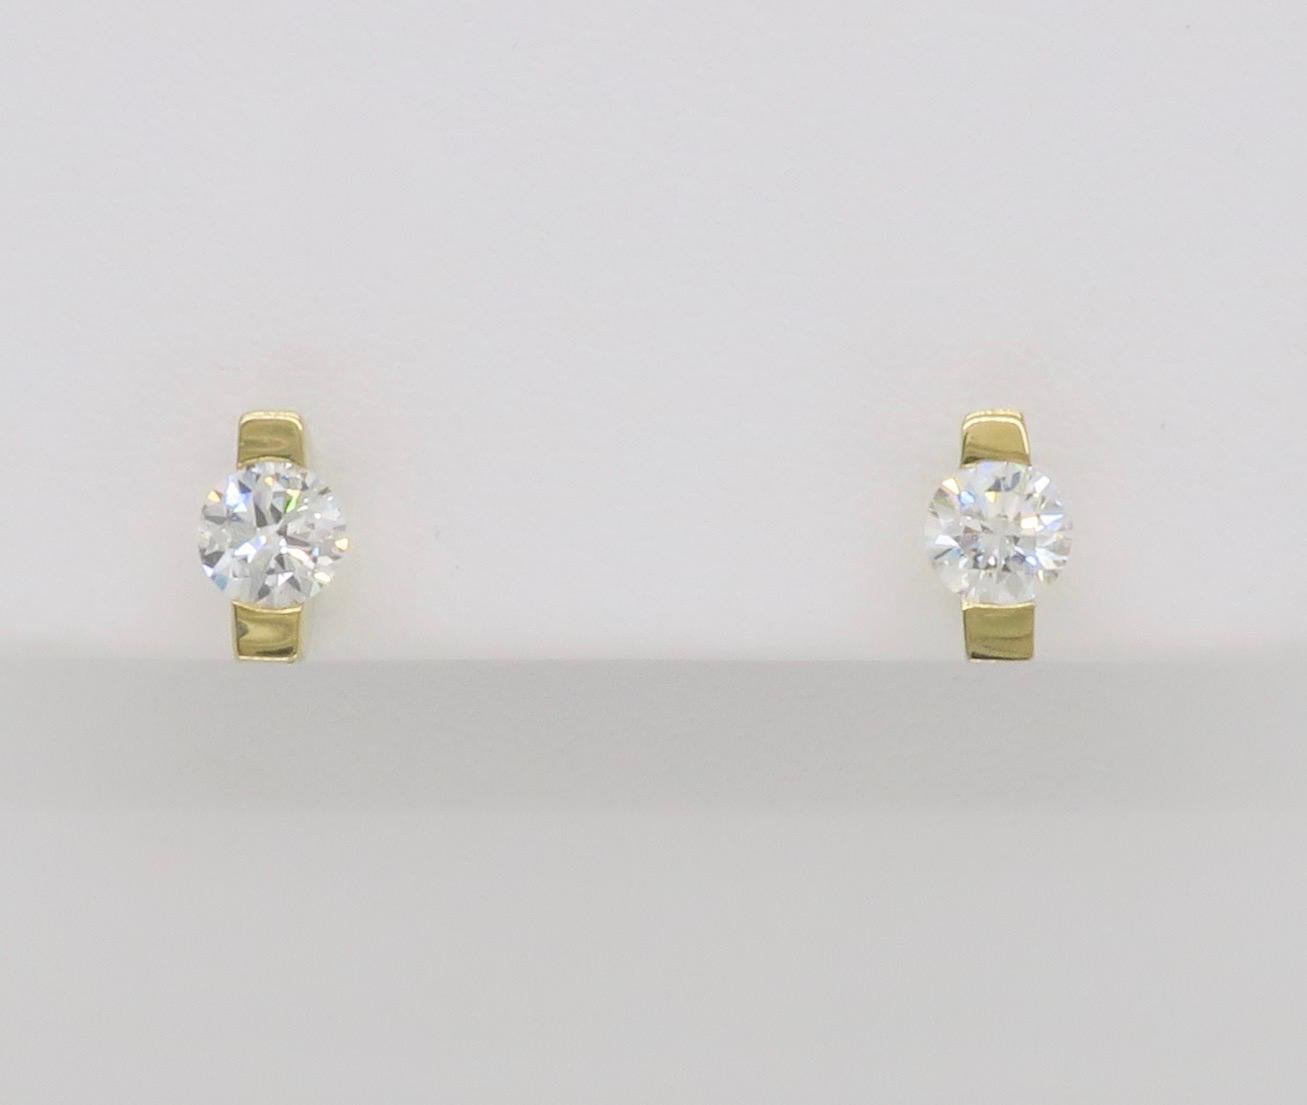 Modern tension set diamond stud earrings made in 14k yellow gold. 

Total Diamond Carat Weight: 0.65CTW
Diamond Cut: Round Brilliant Cut 
Diamond Color: F-G
Diamond Clarity: VS
Metal: 14k Yellow Gold
Stamped: 